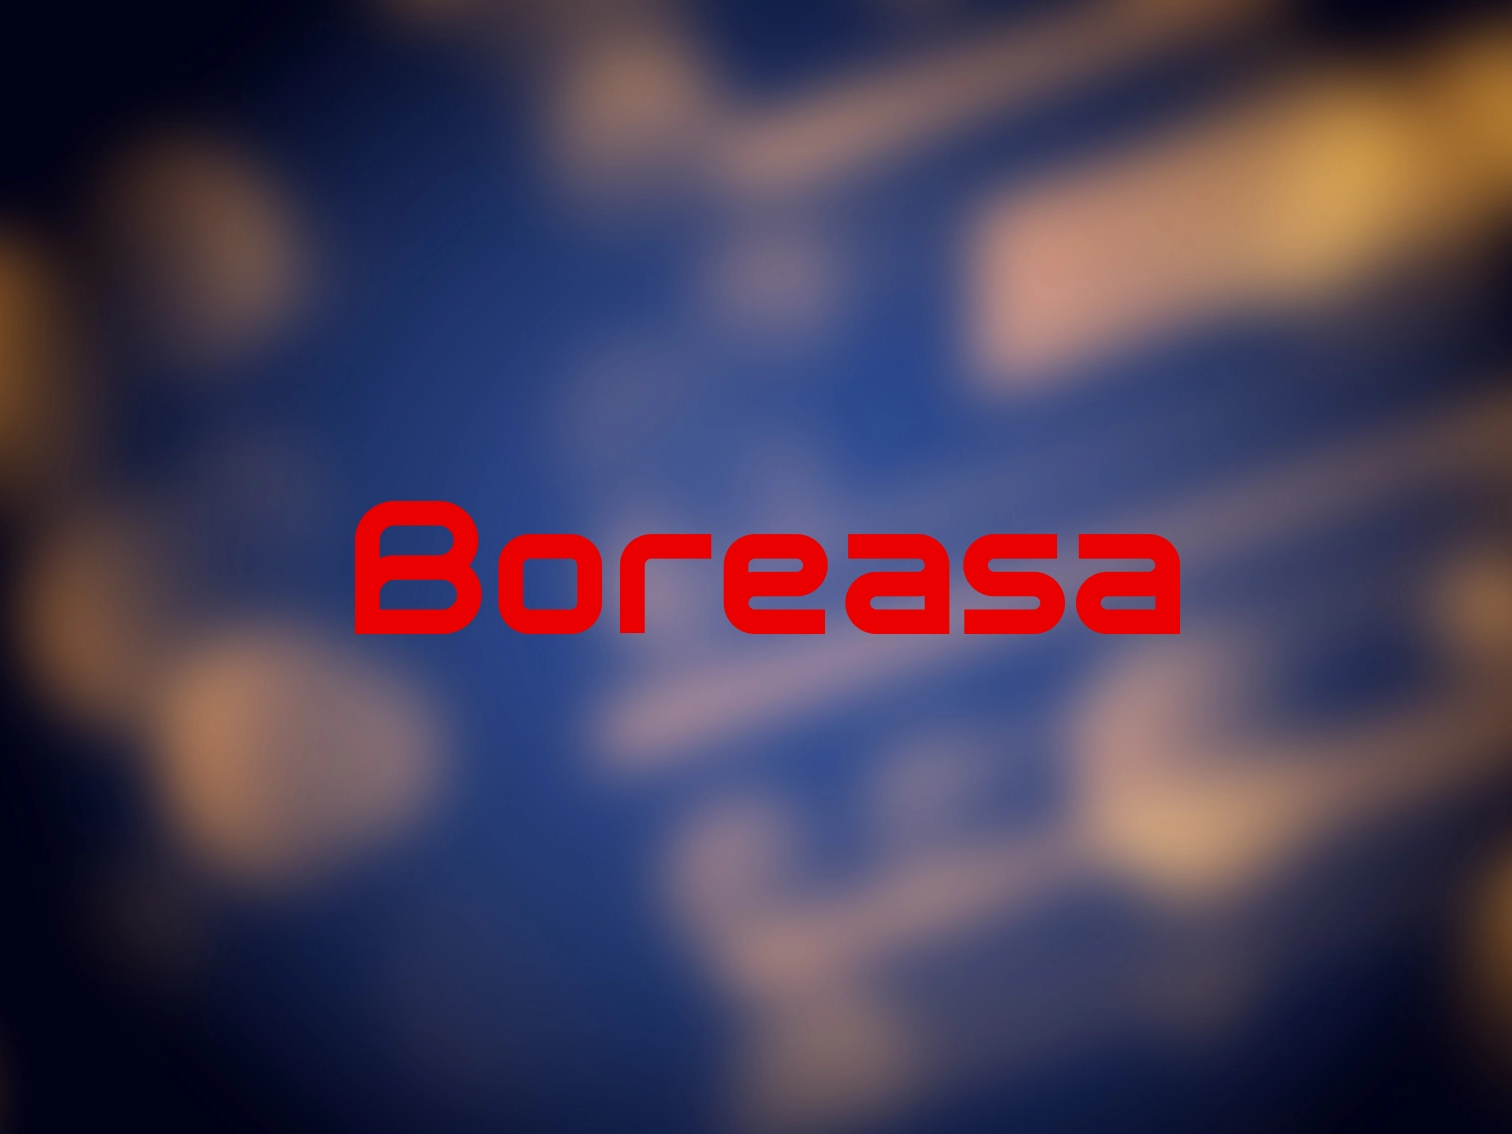 Boreasa resumes the production of non-medical blowers.